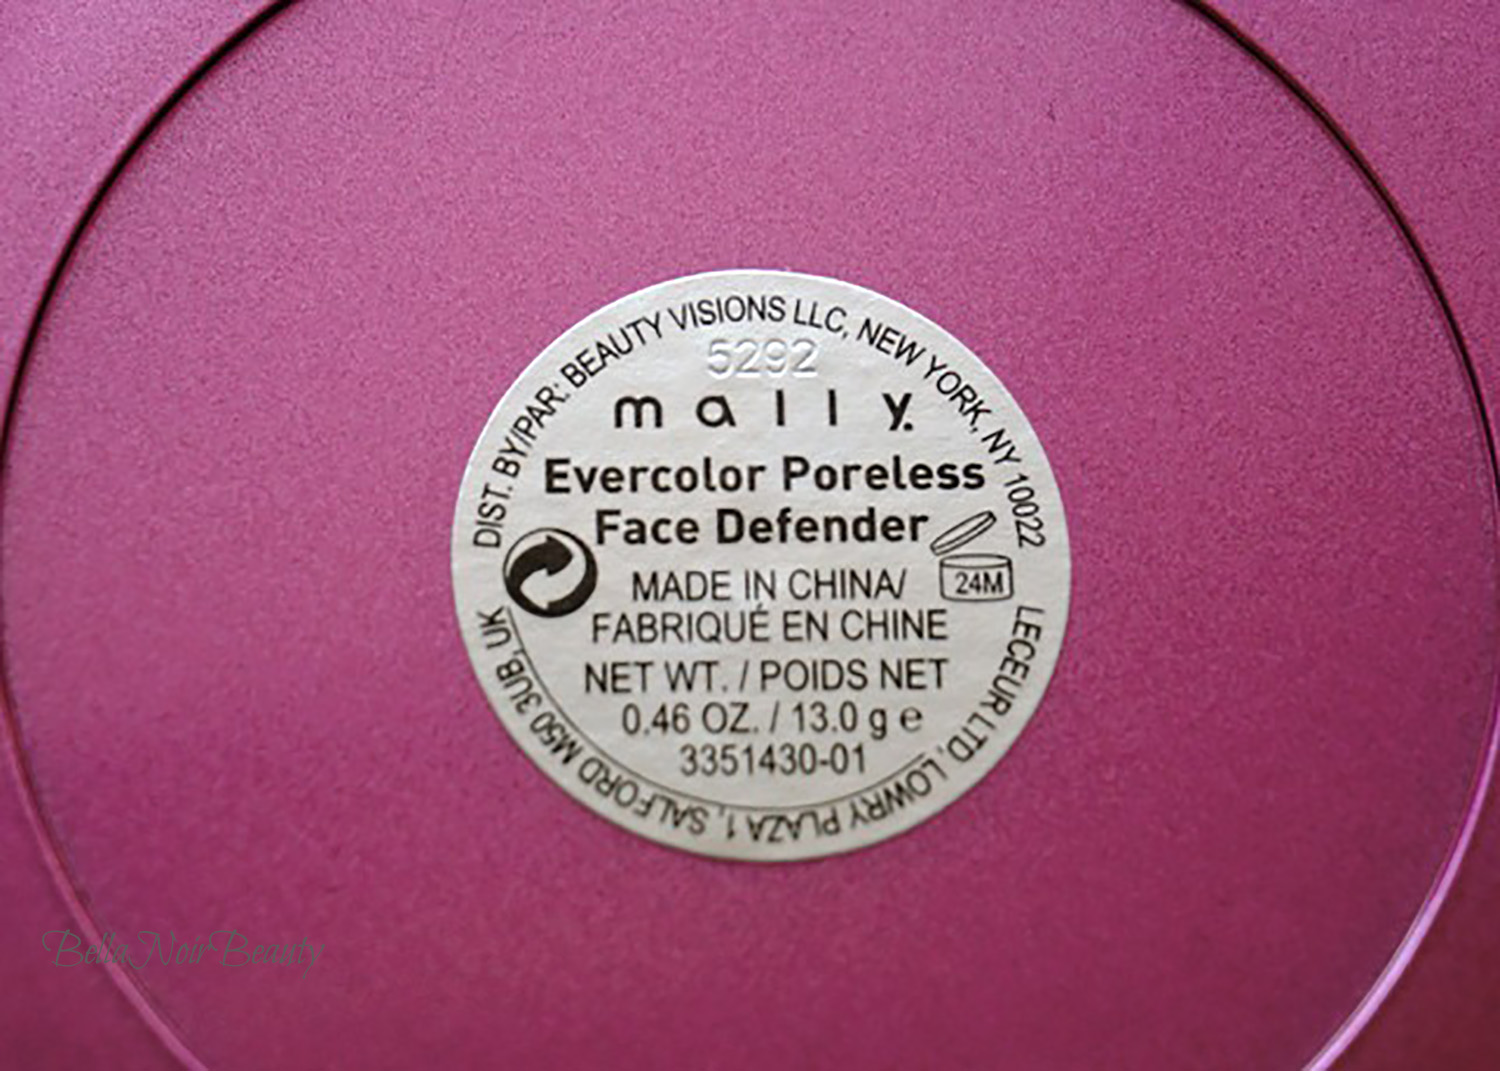 Mally Beauty Face Defender | bellanoirbeauty.com